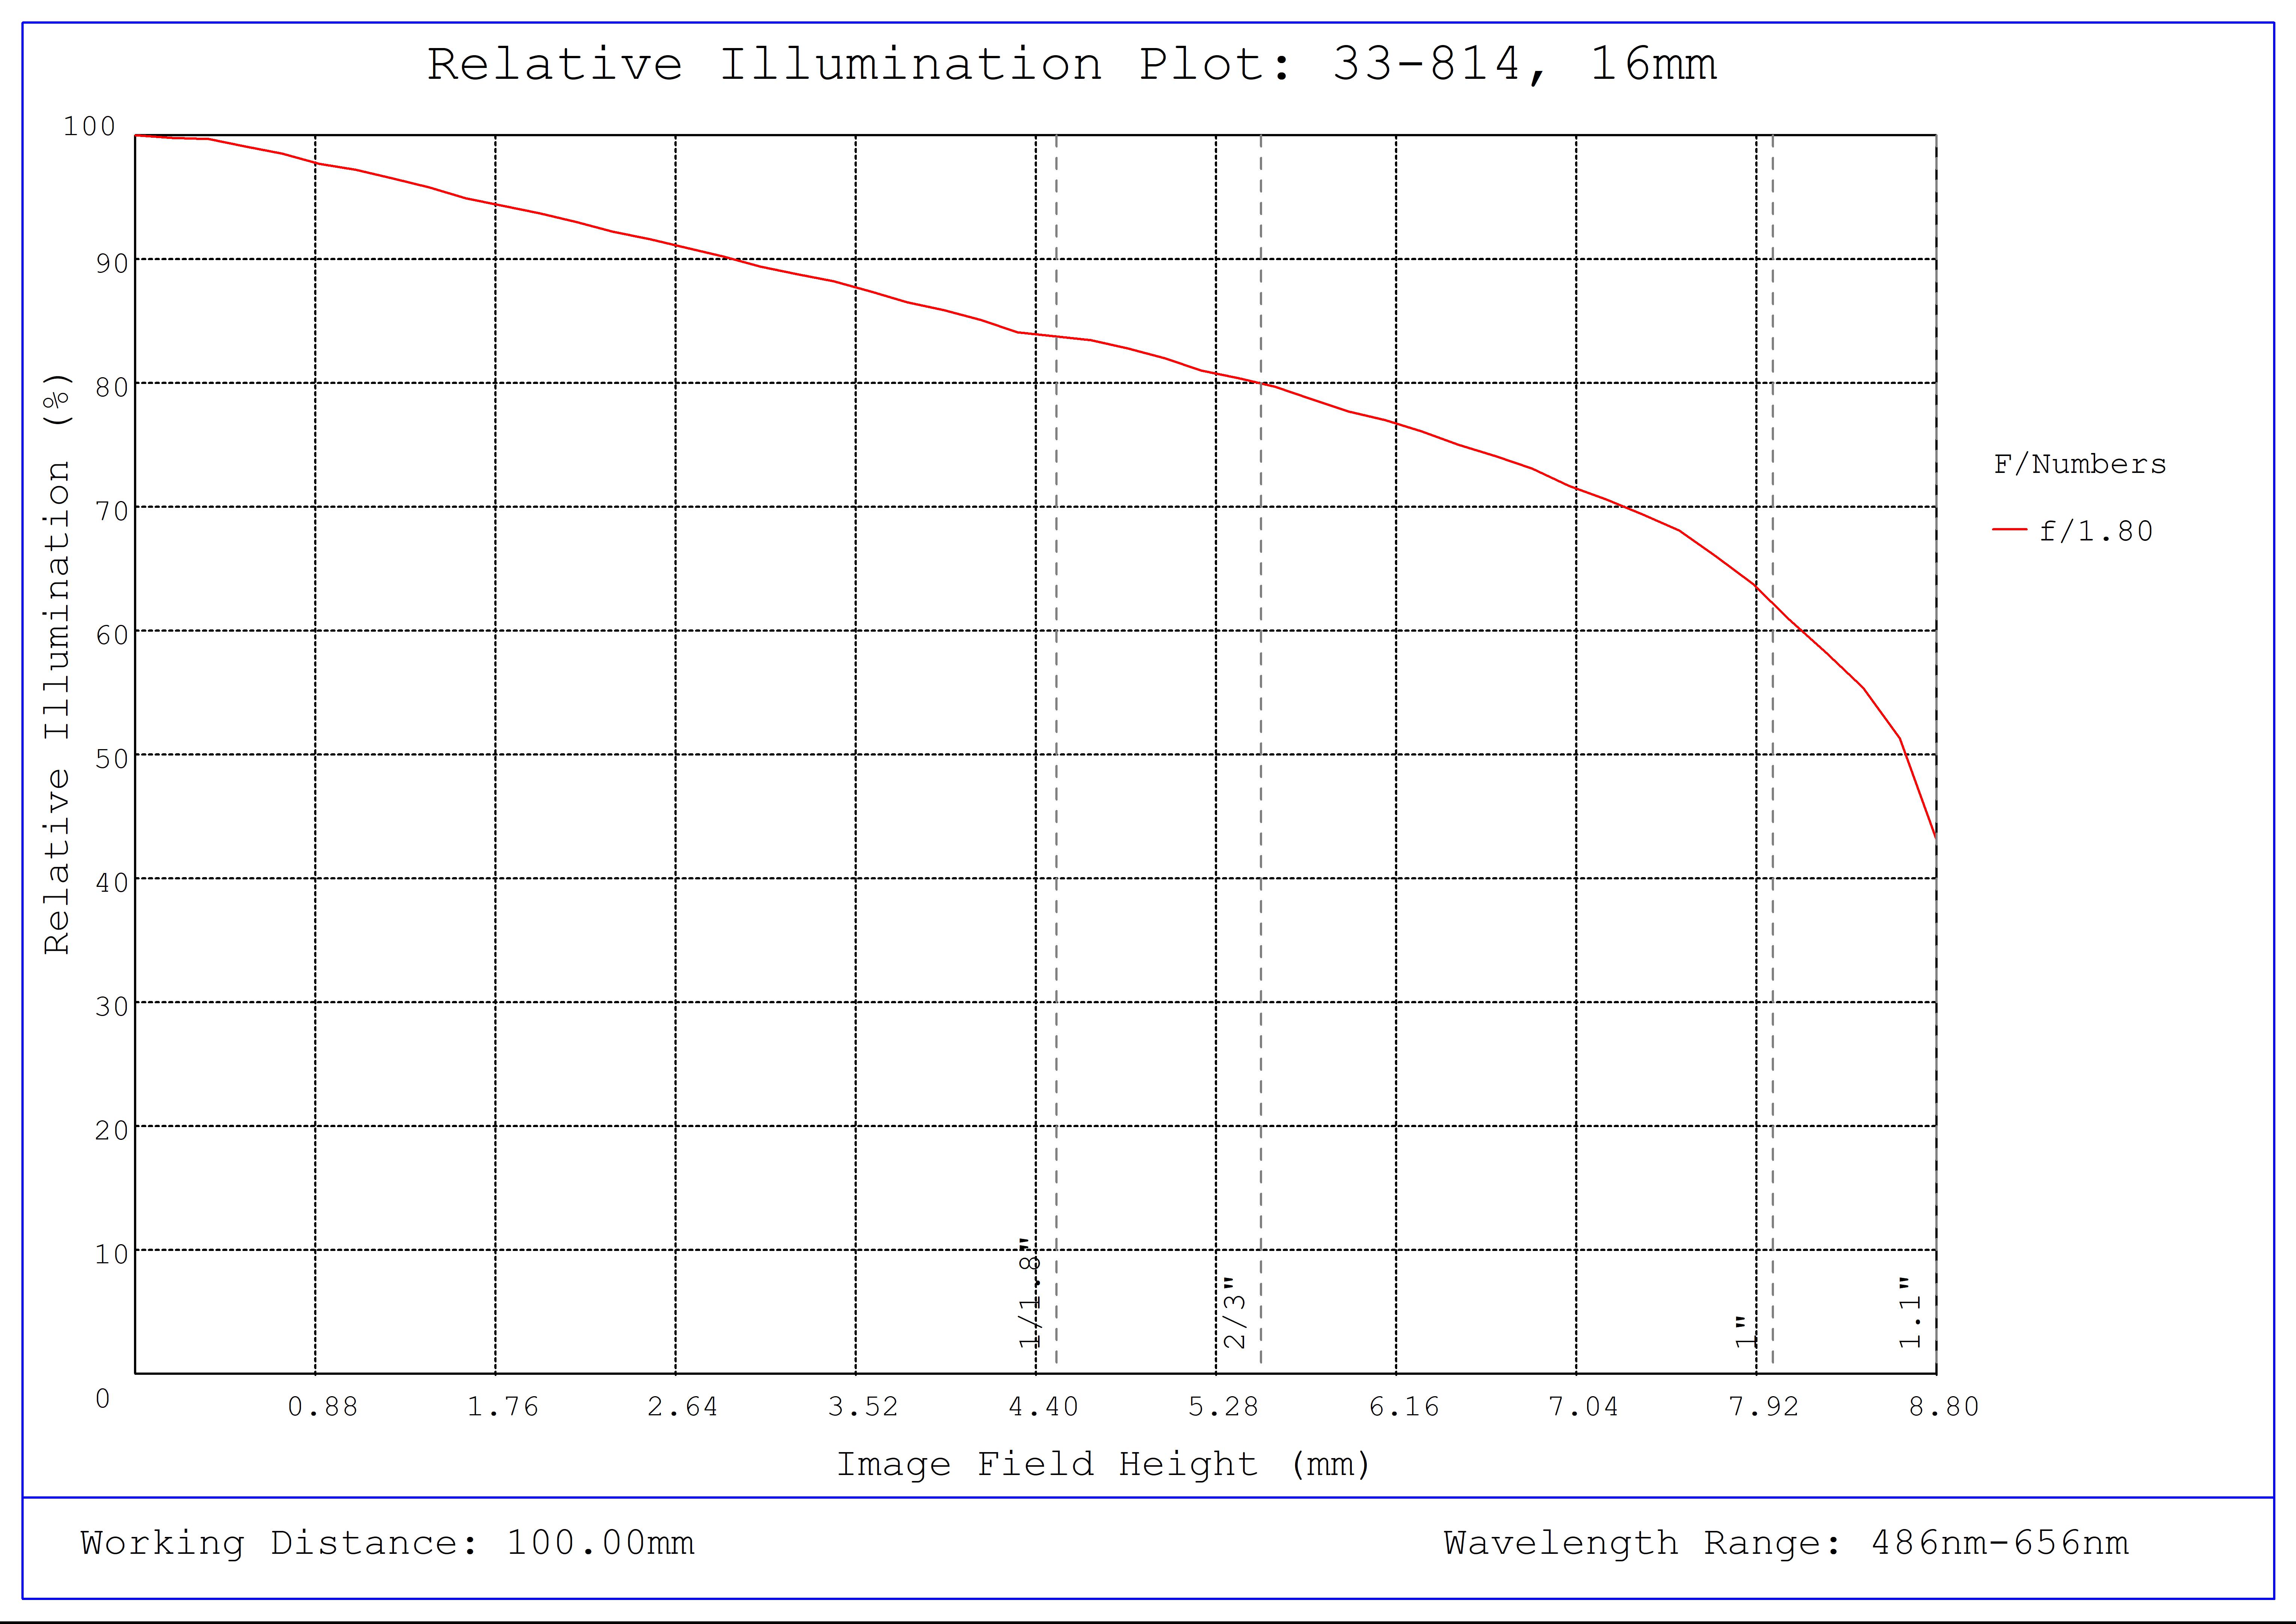 #33-814, 16mm f/1.8, HPi Series Fixed Focal Length Lens, Relative Illumination Plot